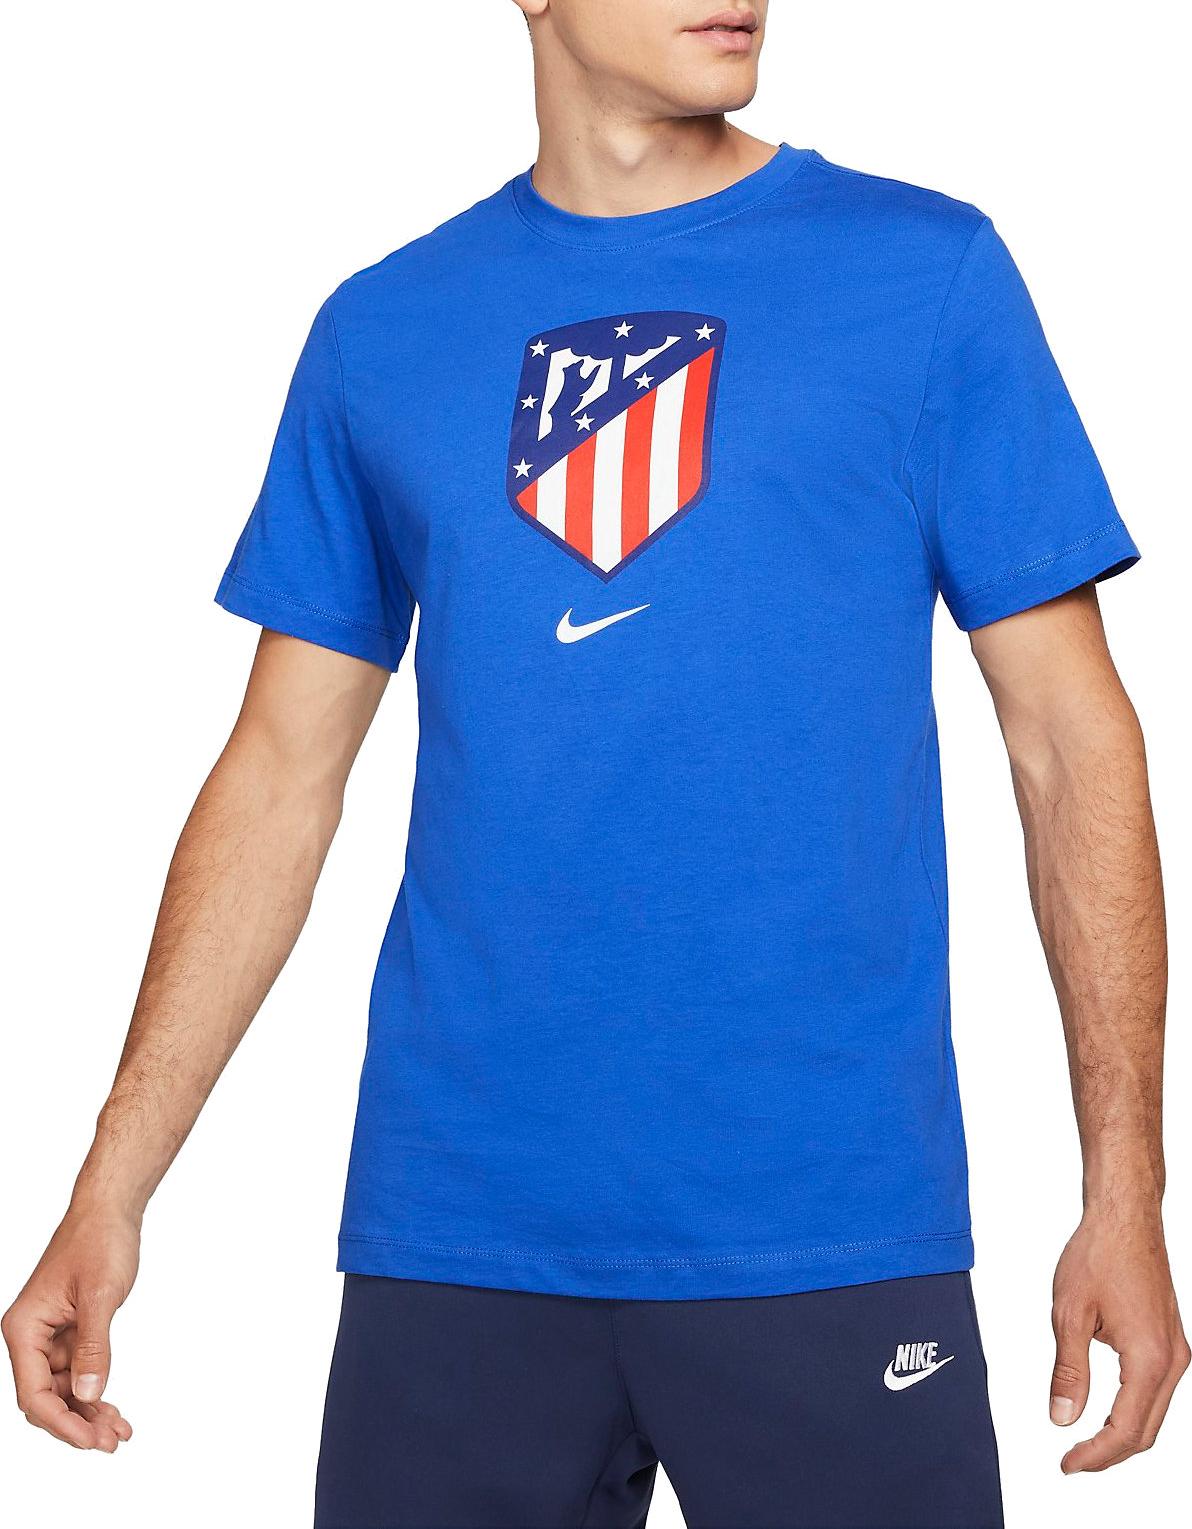 Nike Atlético de Madrid Men s T-Shirt Rövid ujjú póló